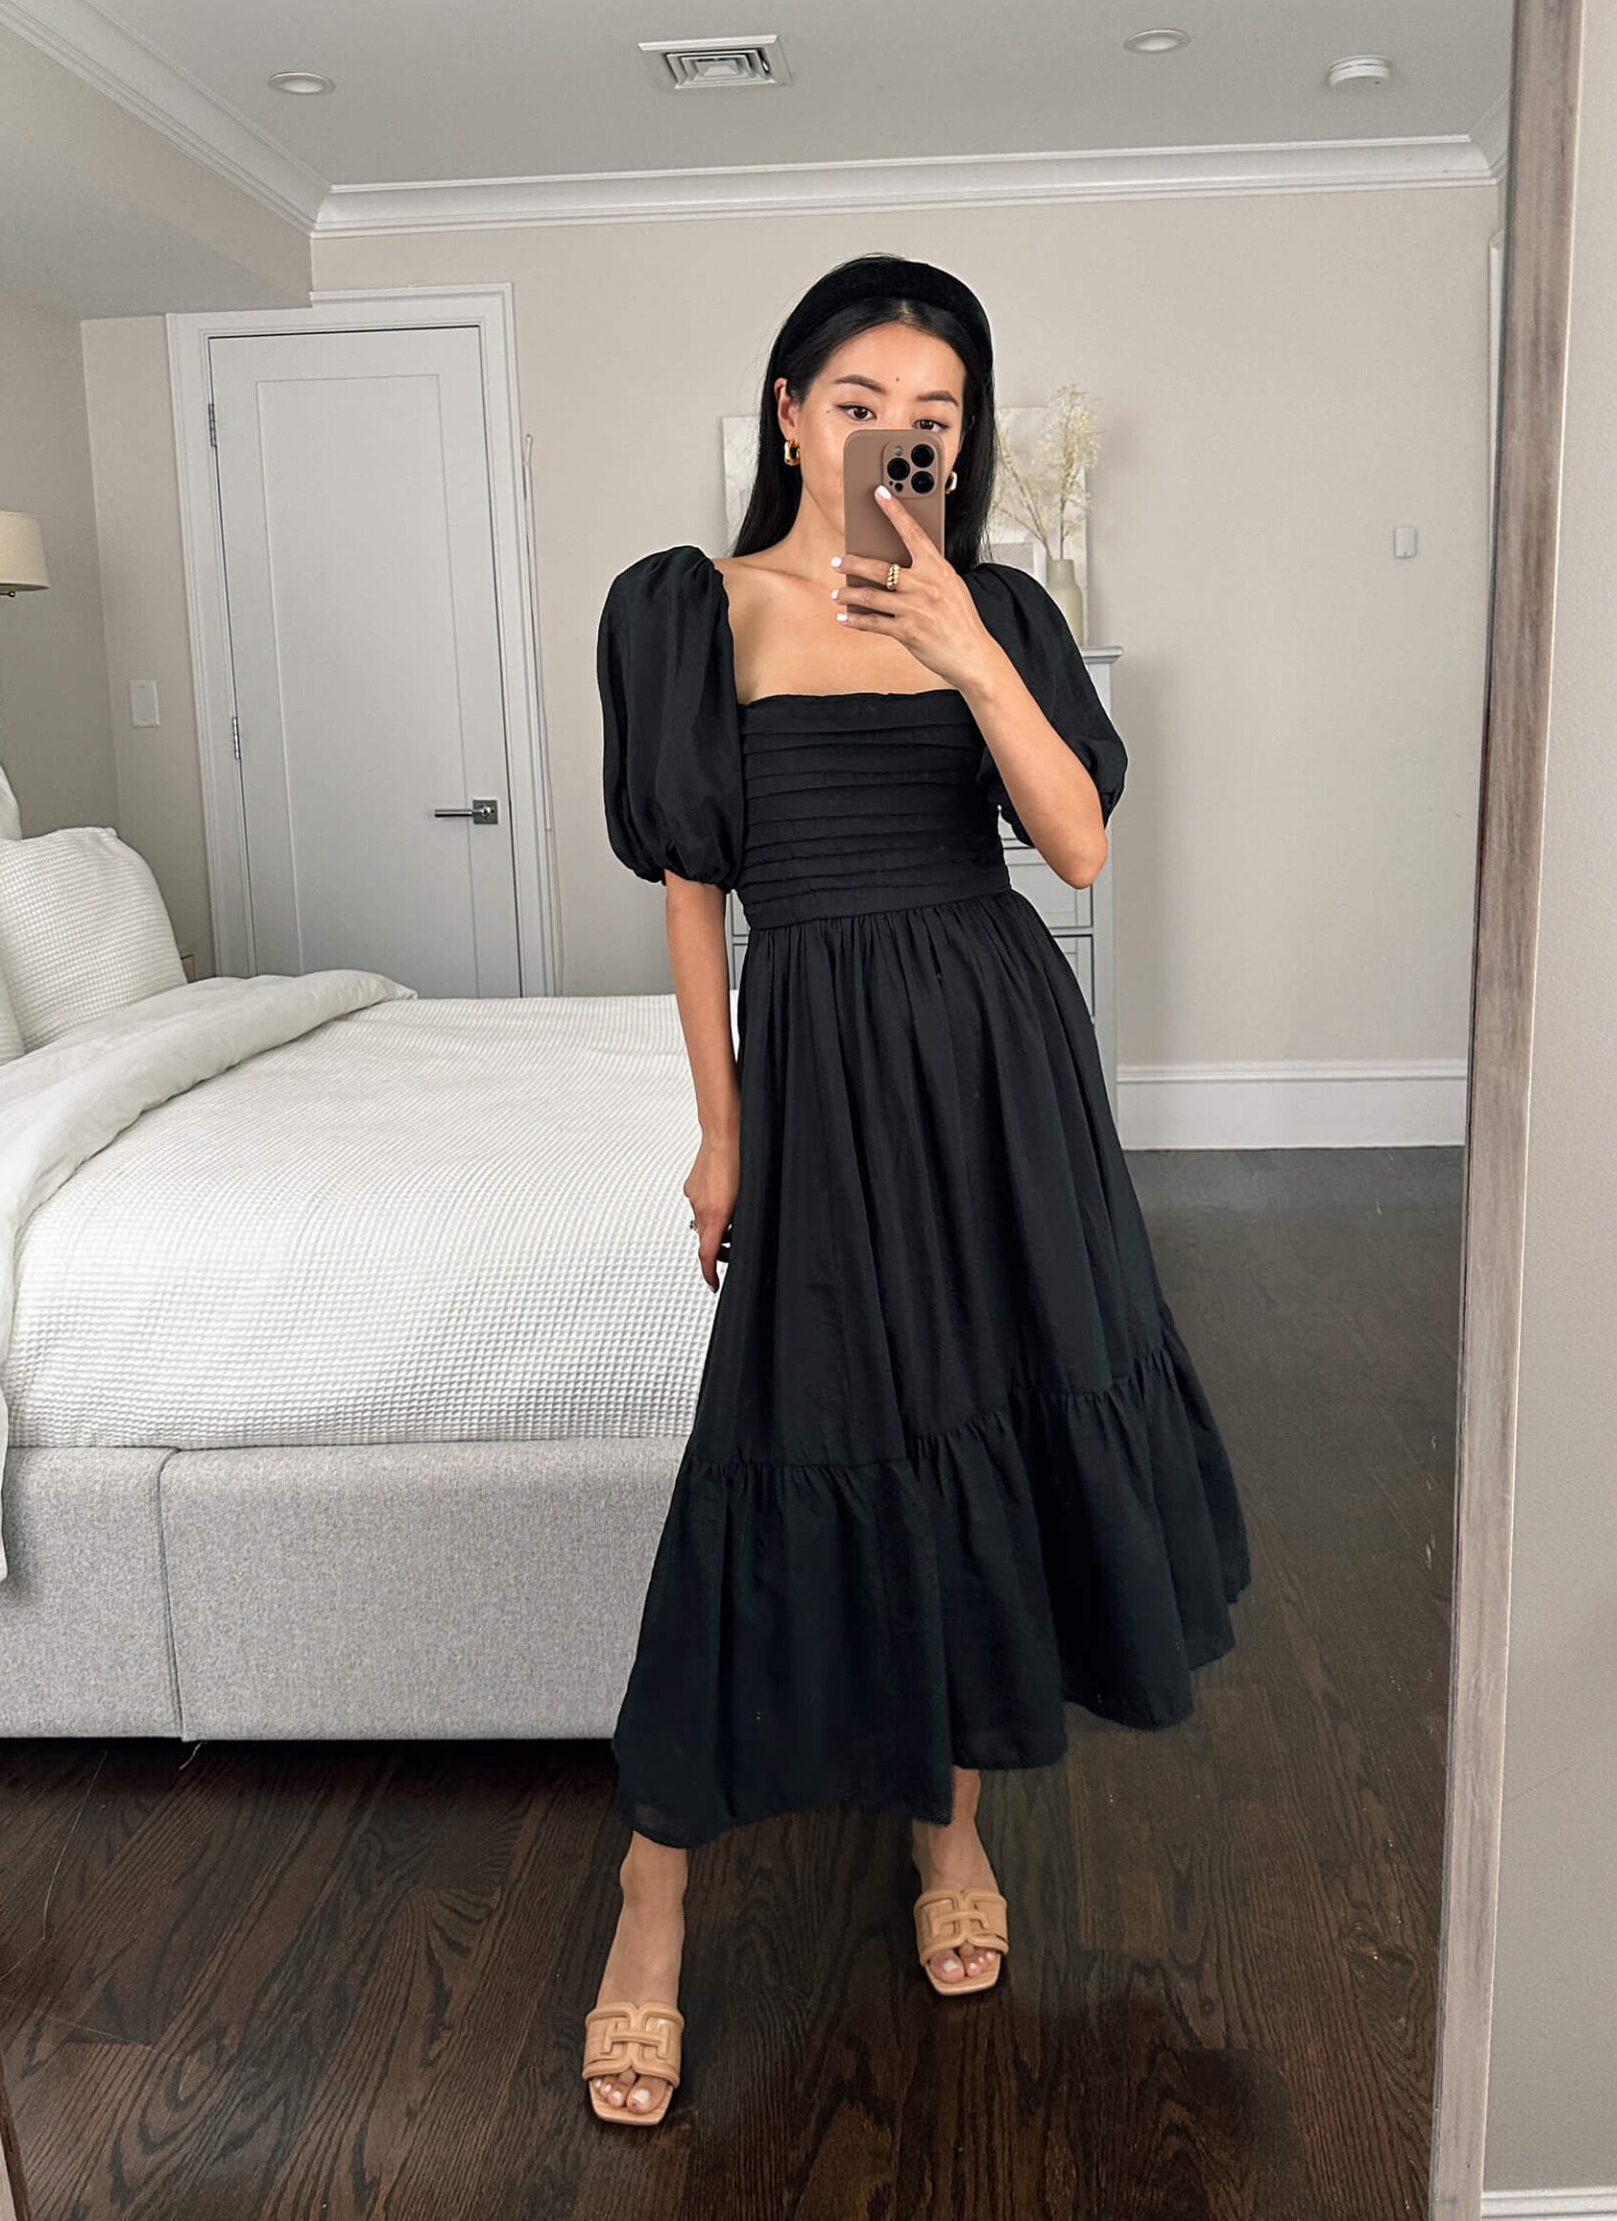 abercrombie black dress lightweight